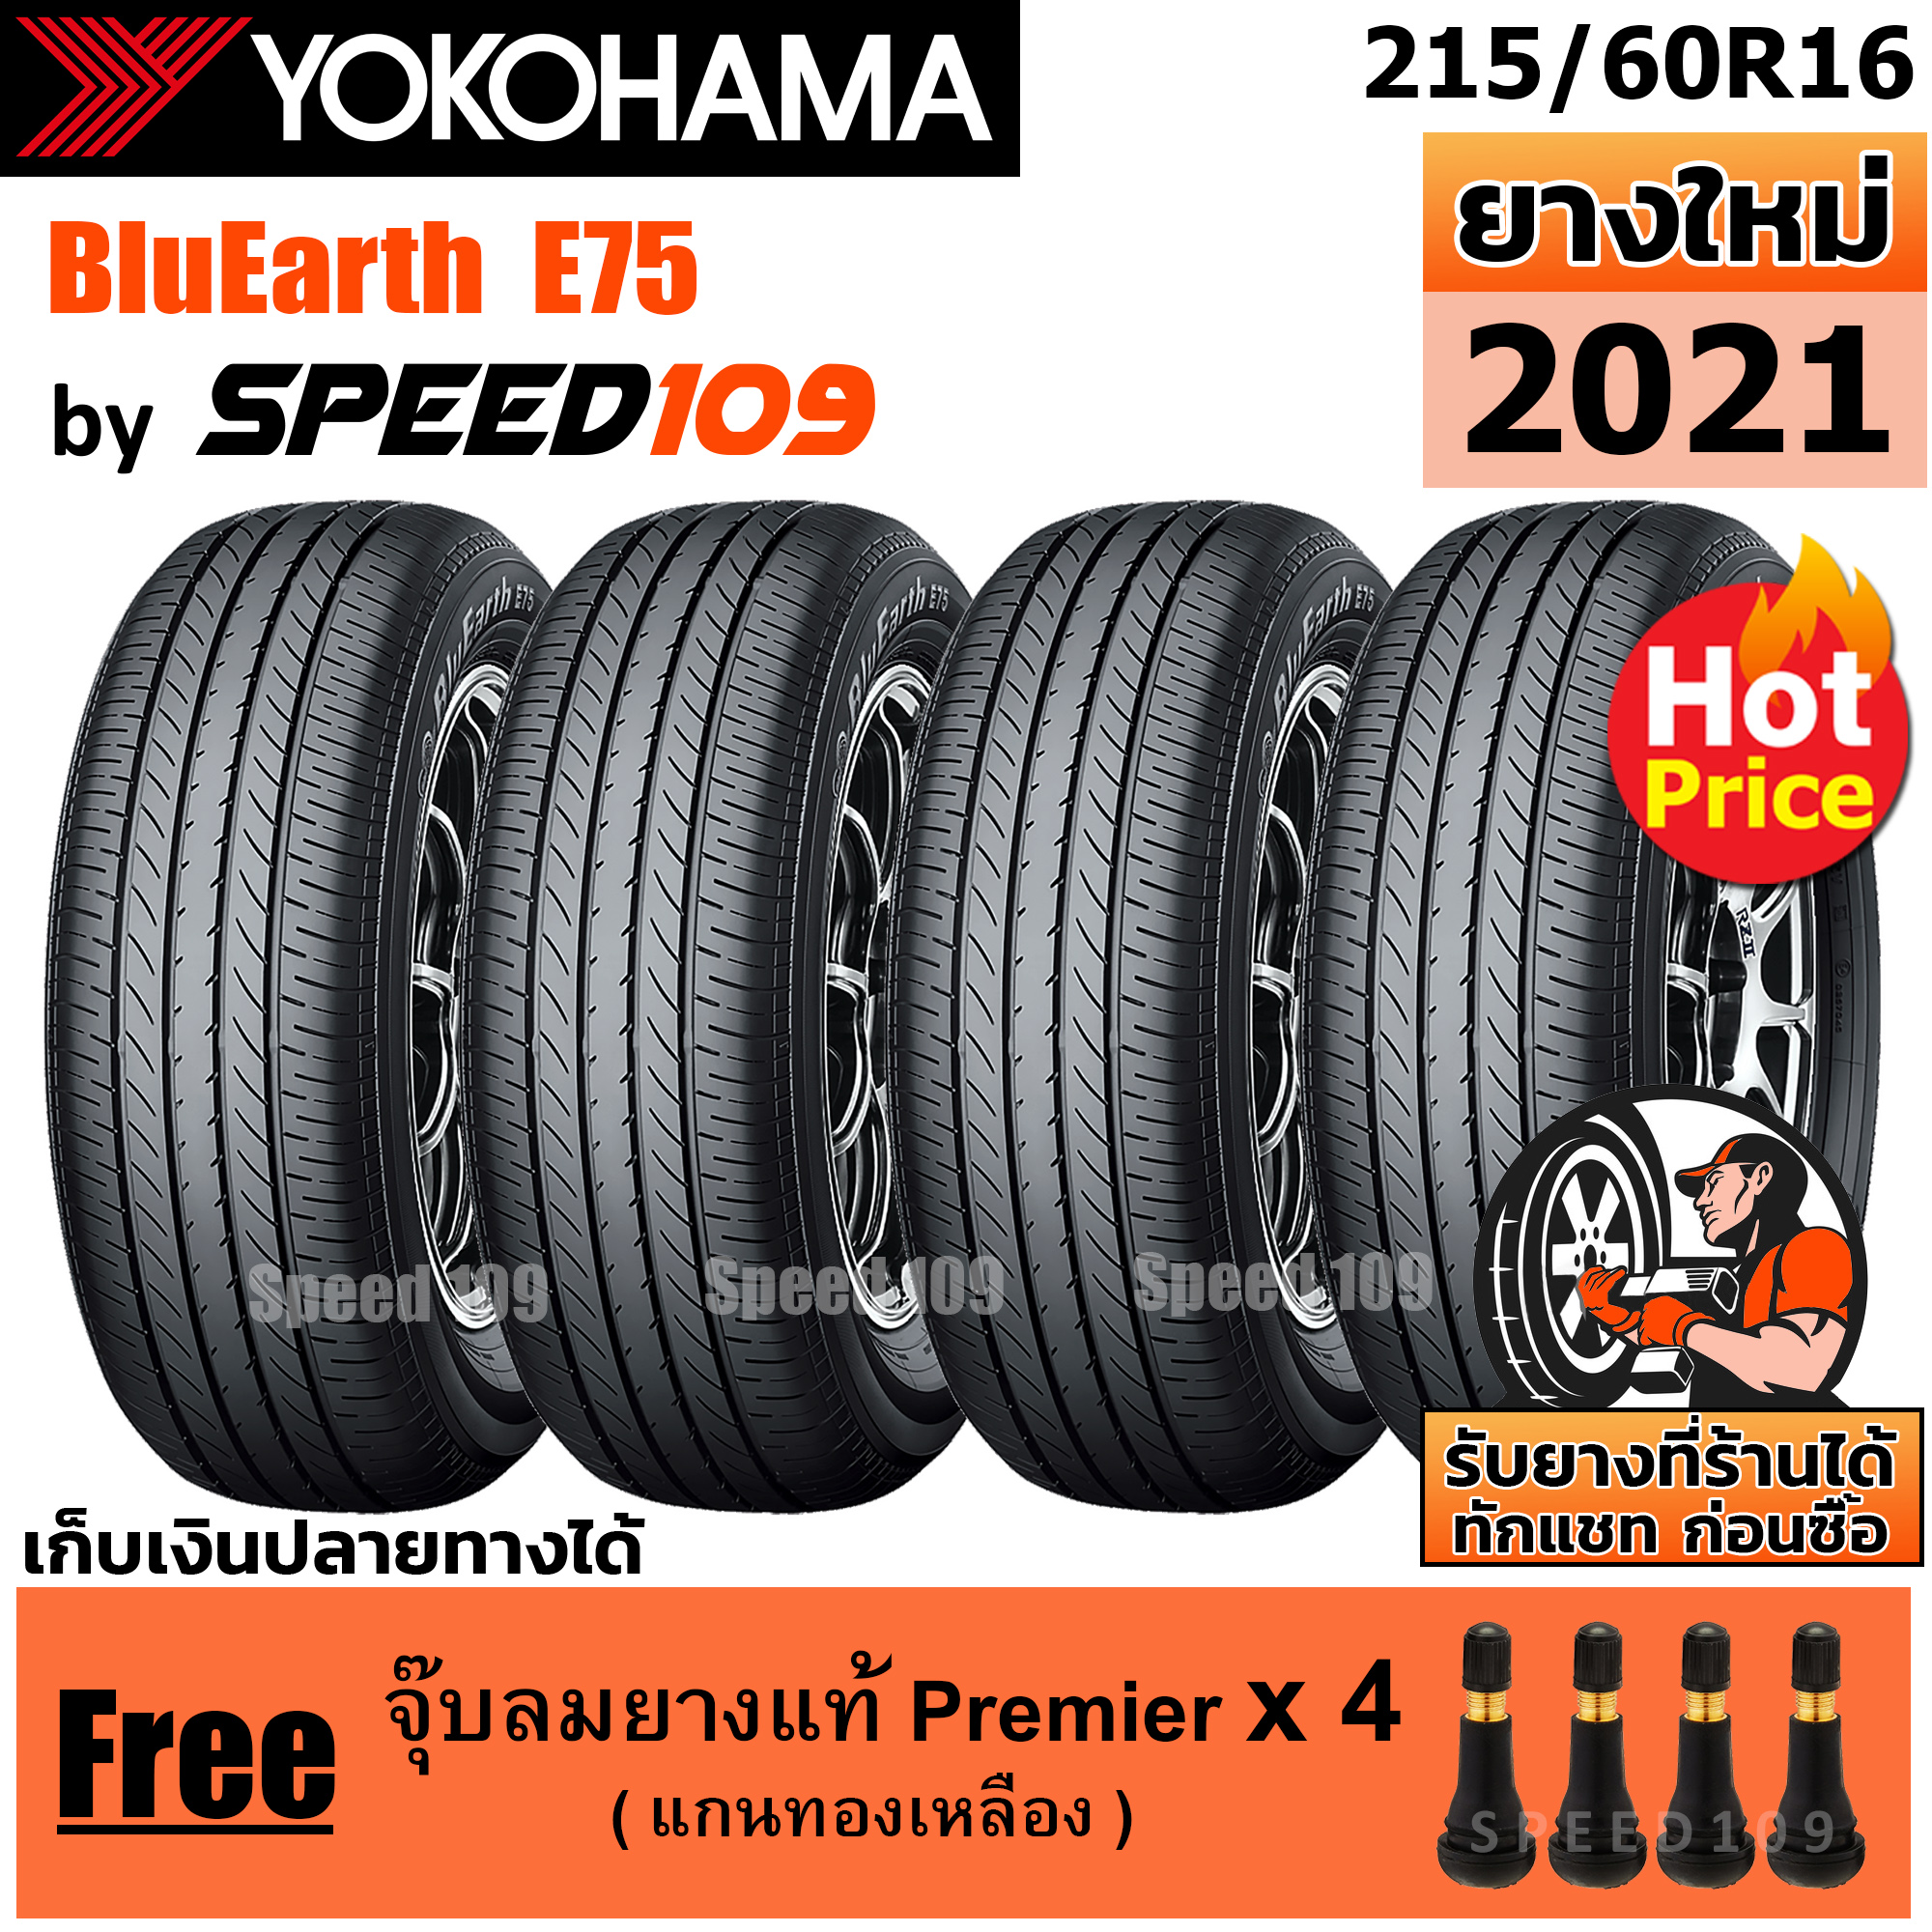 YOKOHAMA ยางรถยนต์ ขอบ 16 ขนาด 215/60R16 รุ่น BluEarth E75 - 4 เส้น (ปี 2021)